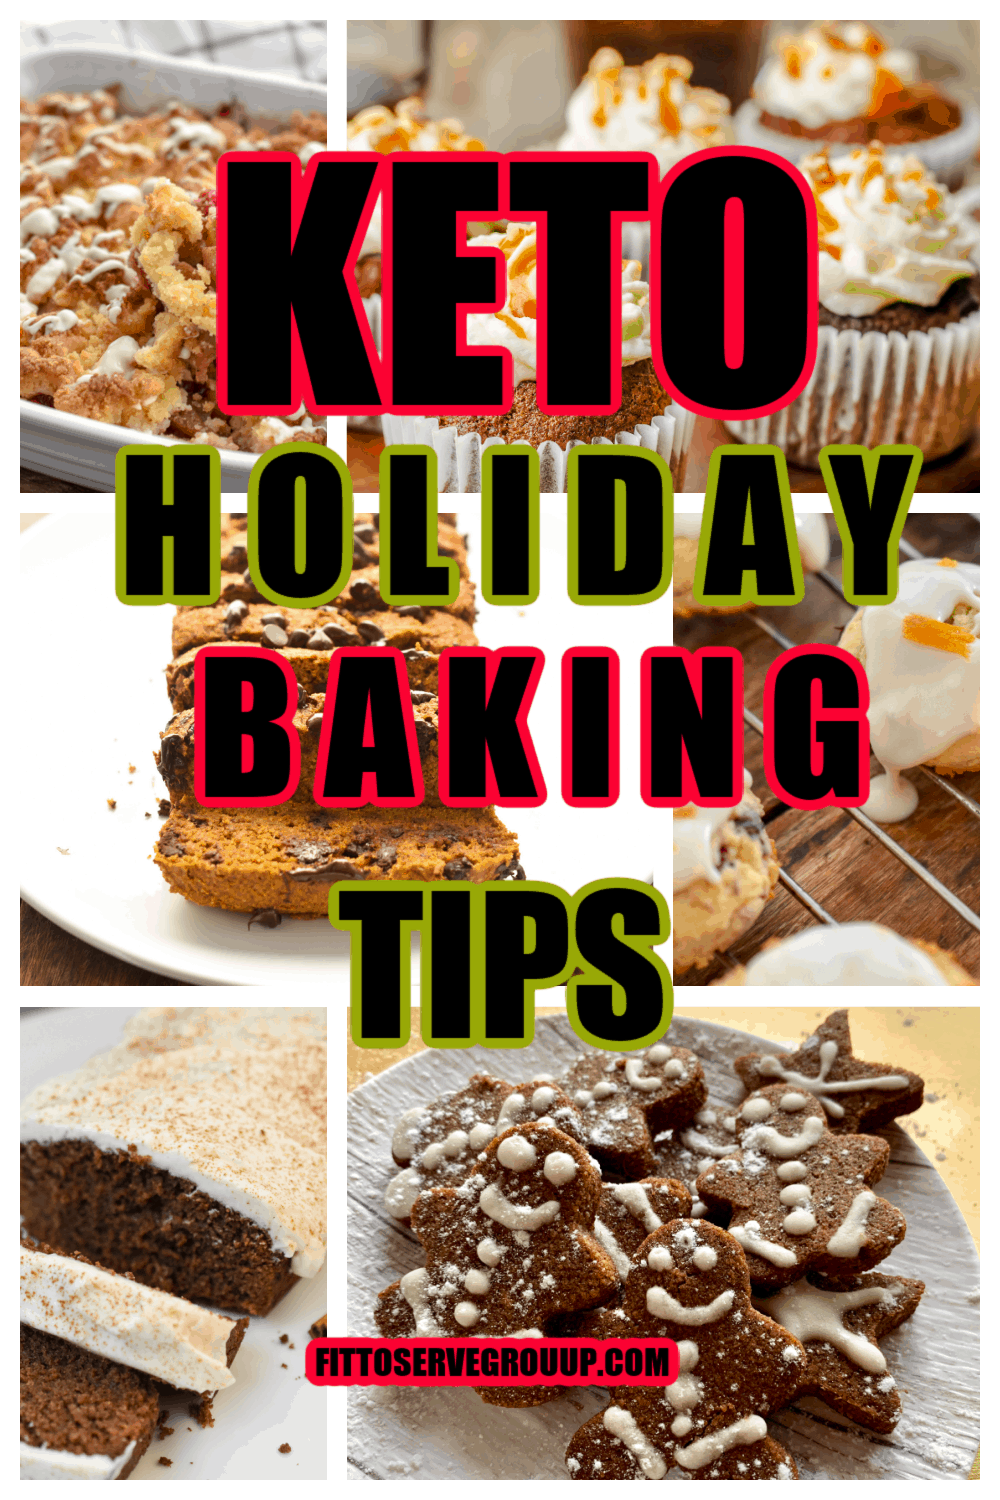 Low carb Keto Holiday Baking Tips